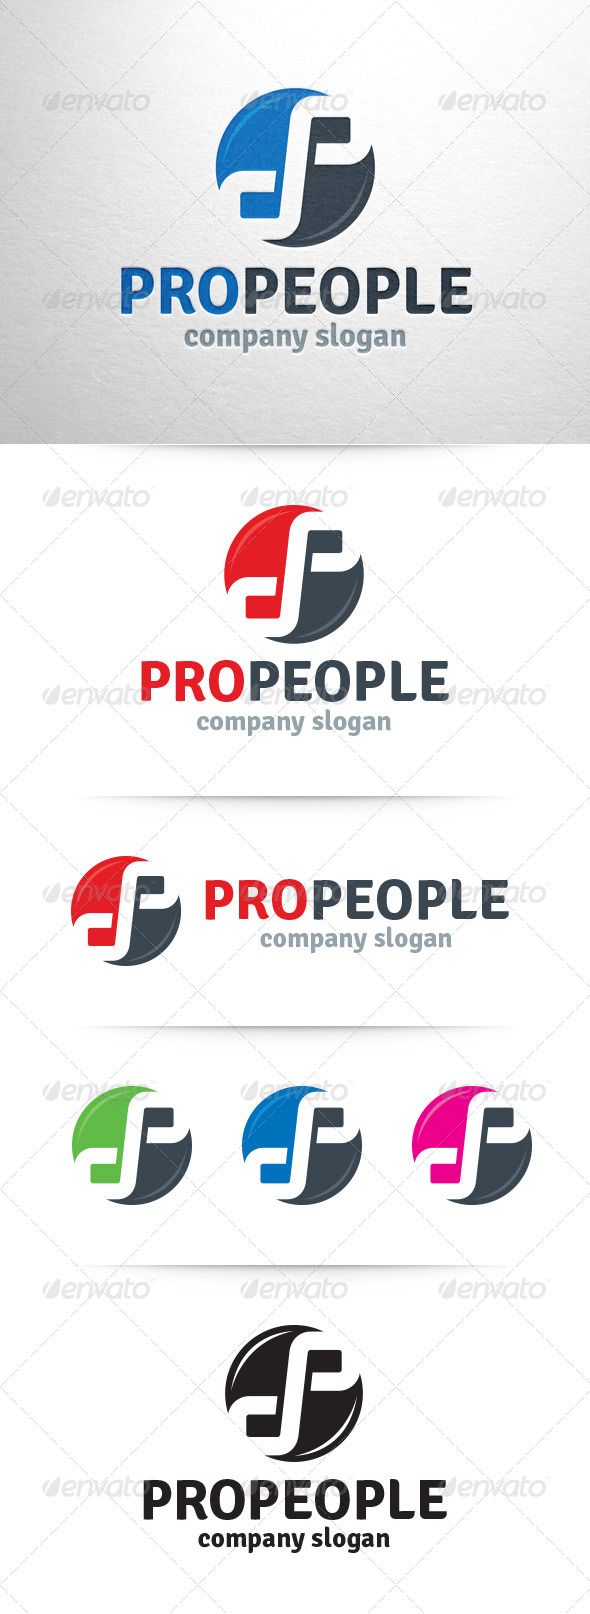 Pro People - Letter P Logo